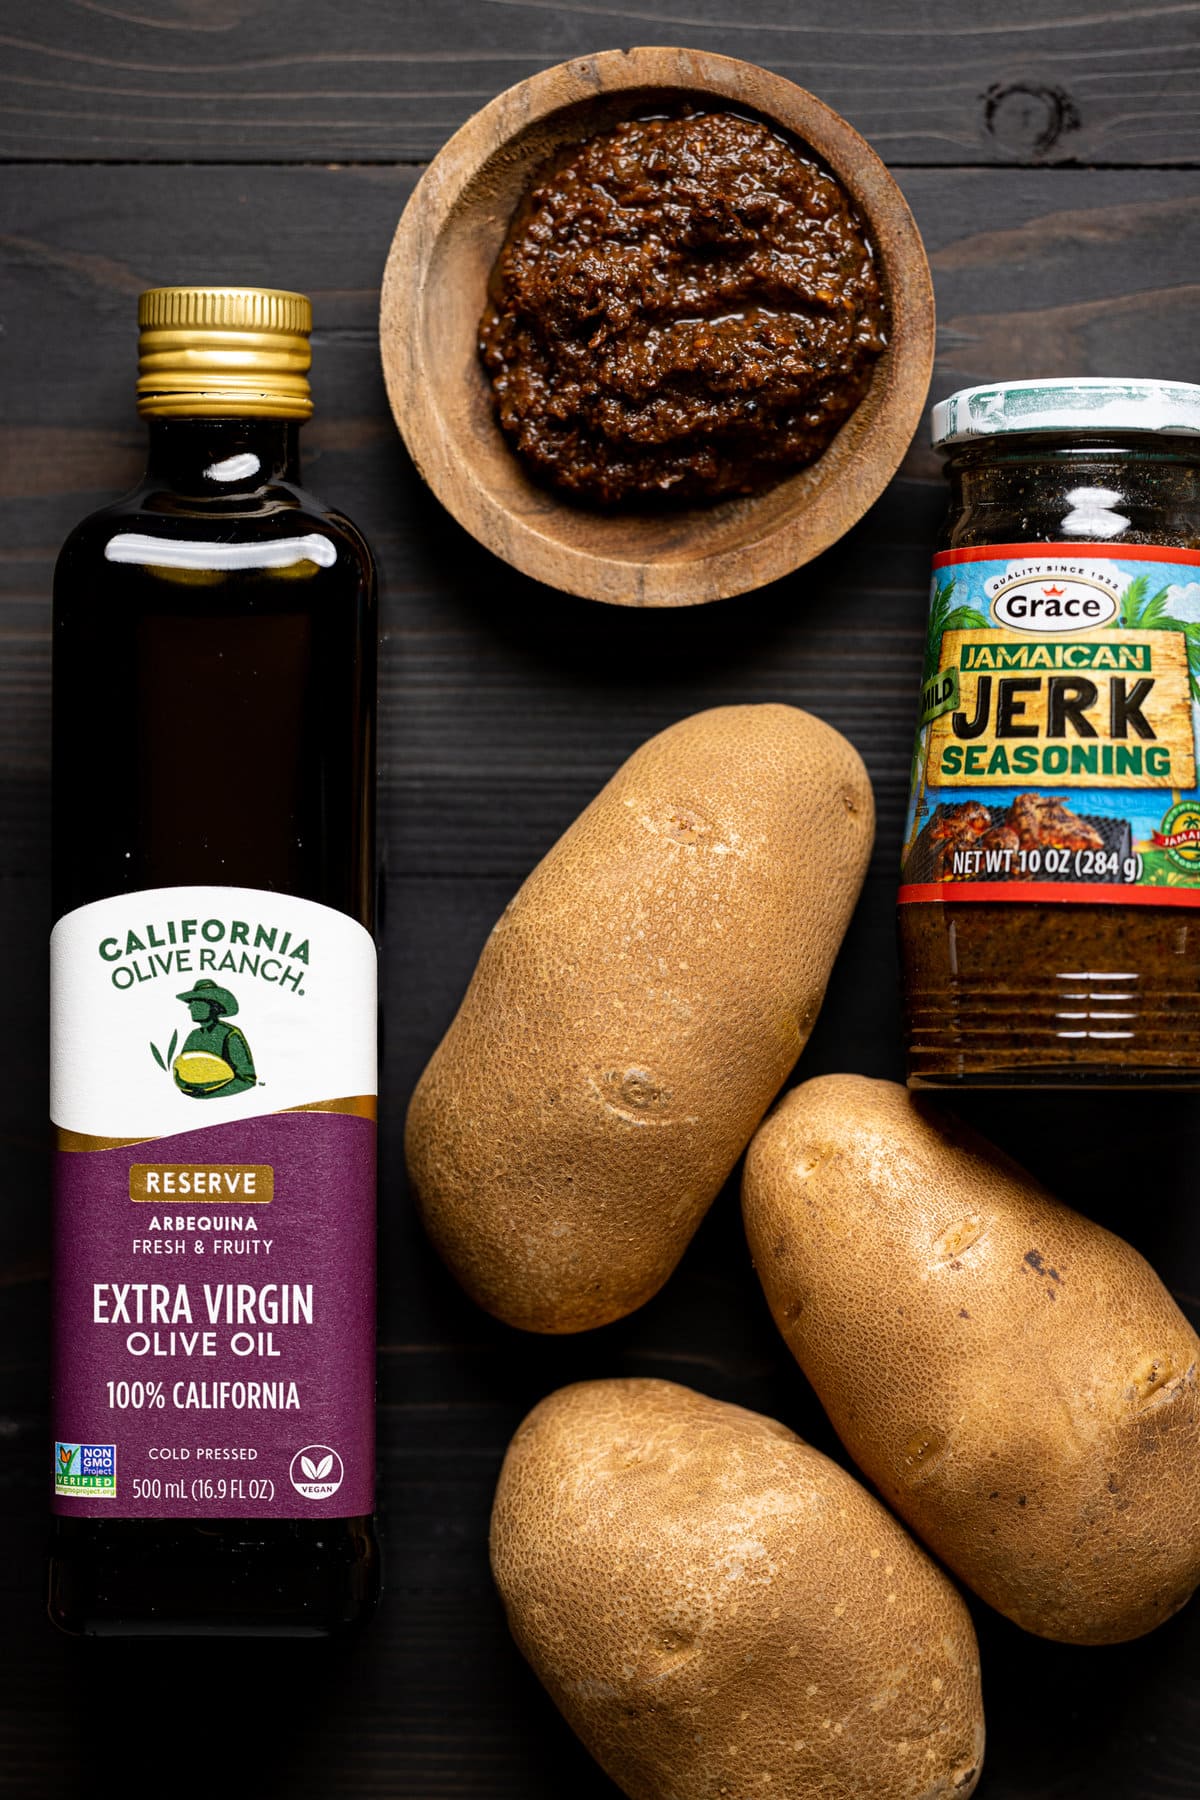 Potatoes, jerk seasoning, and olive oil